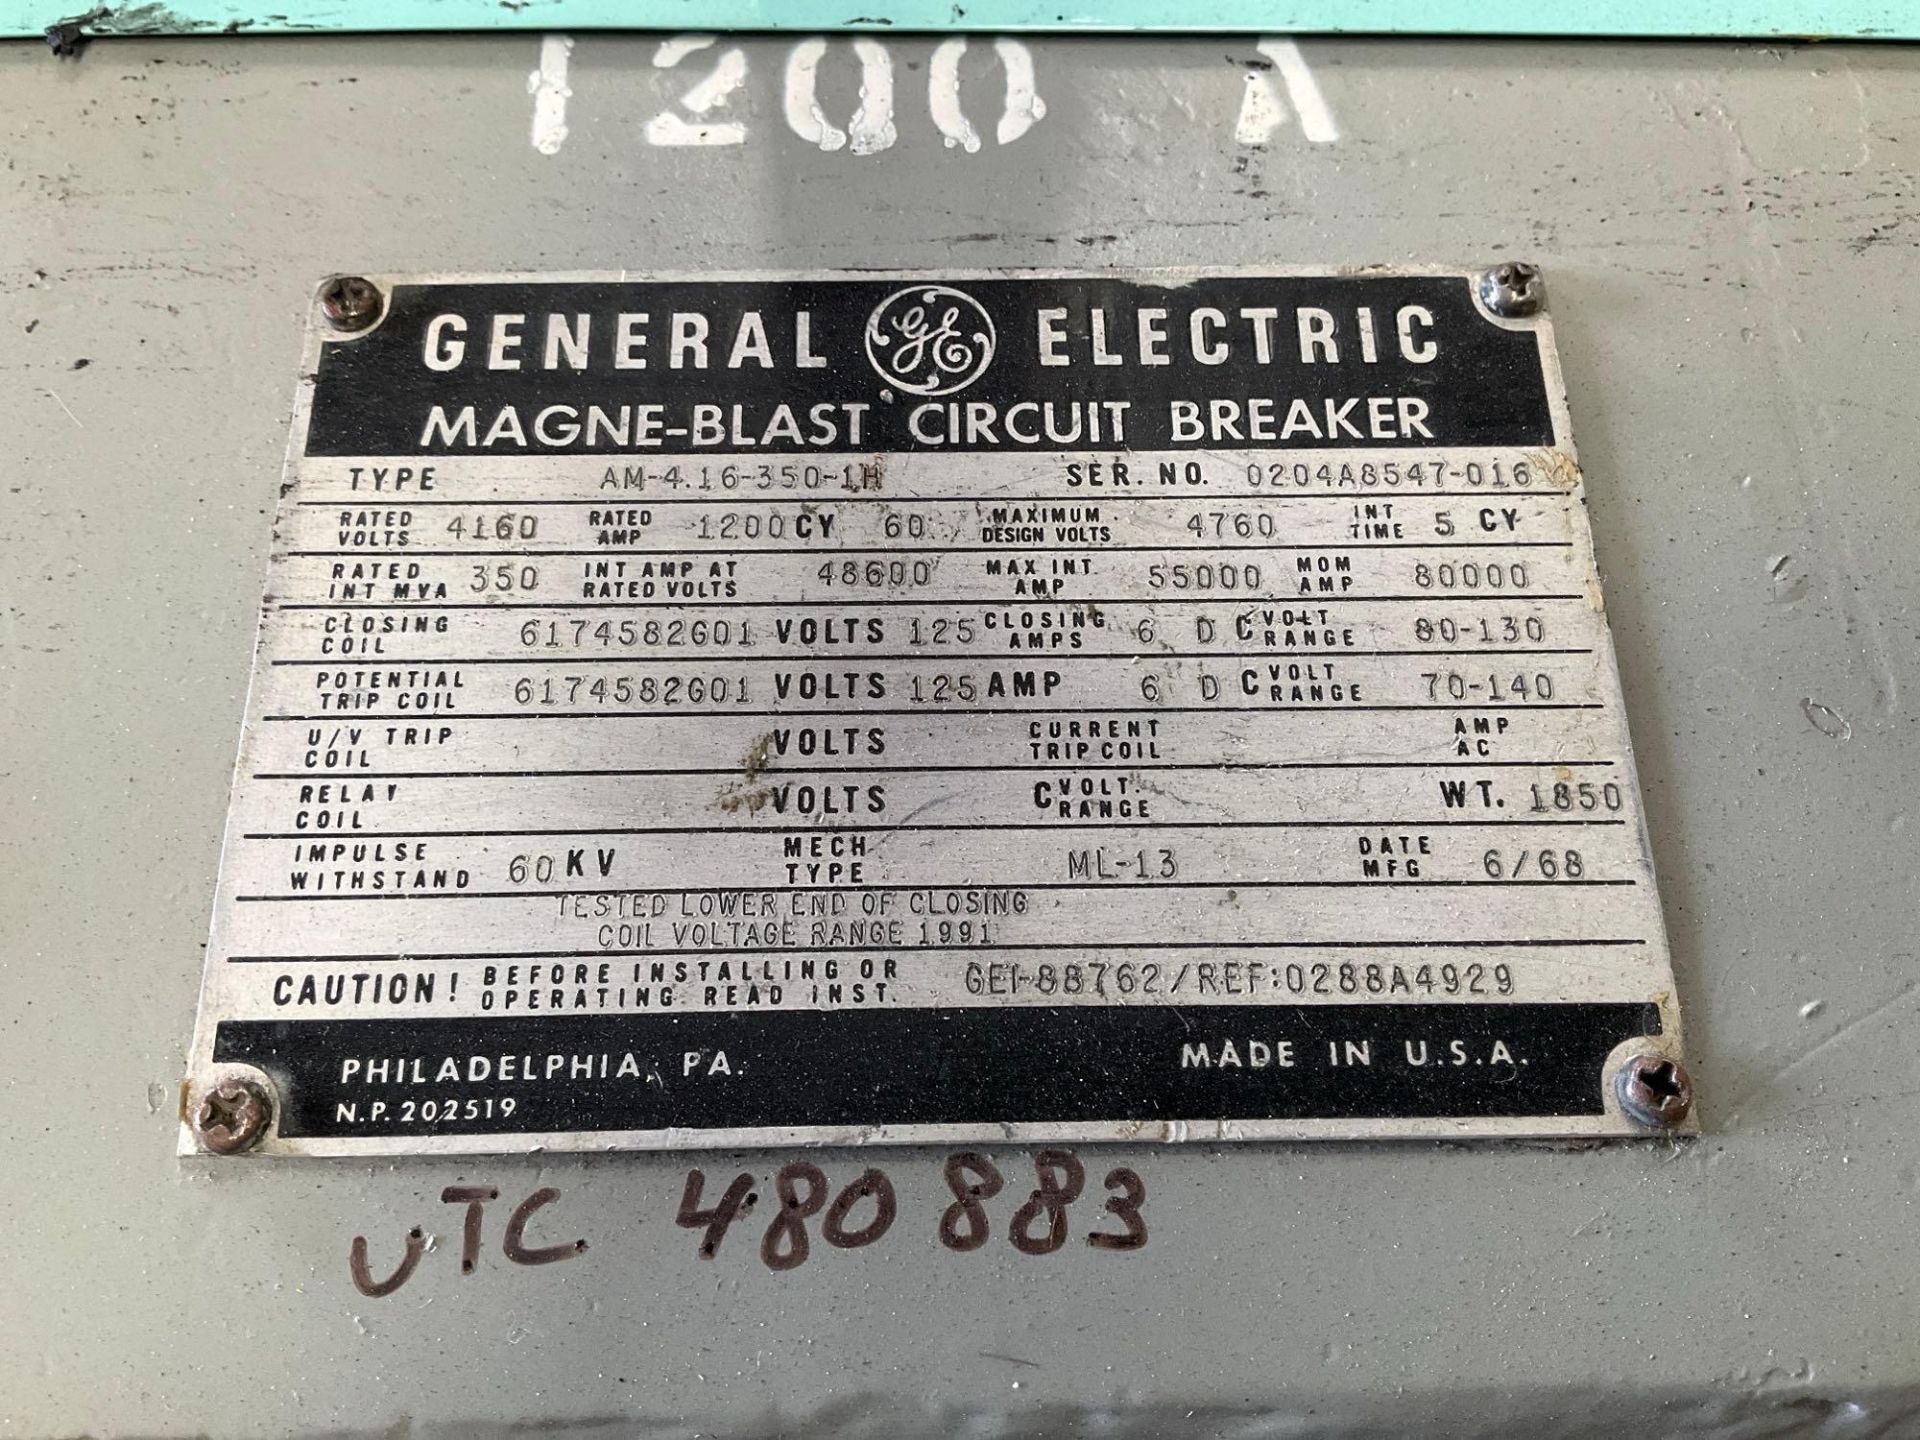 GE - GENERAL ELECTRIC MAGNE-BLAST CIRCUIT BREAKER, TYPE AM-4.16-350-2H, 60HZ, 1200 AMP - Image 9 of 11